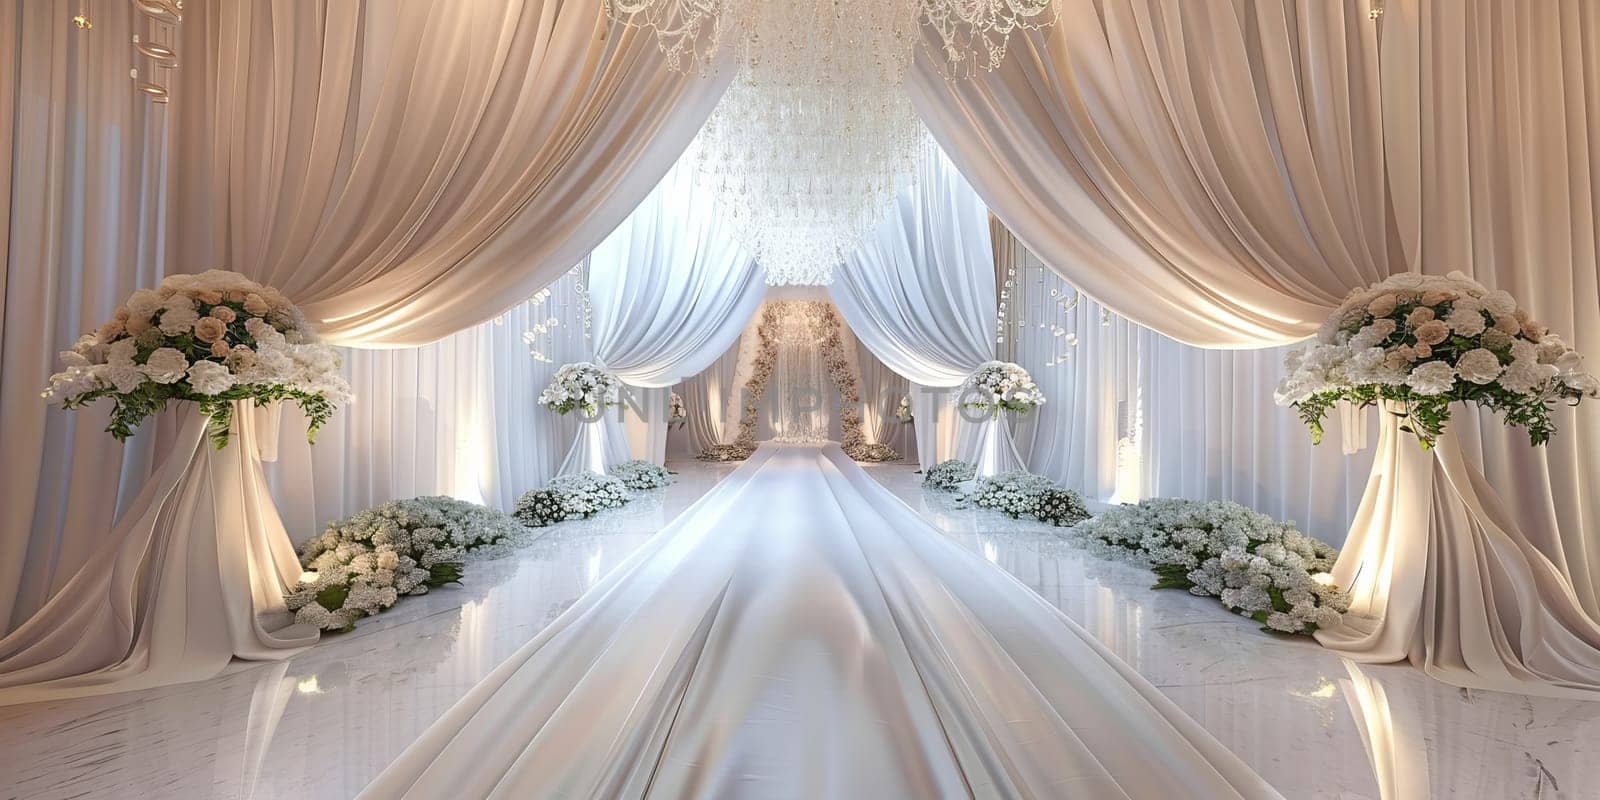 Elegant wedding aisle adorned with white floral arrangements